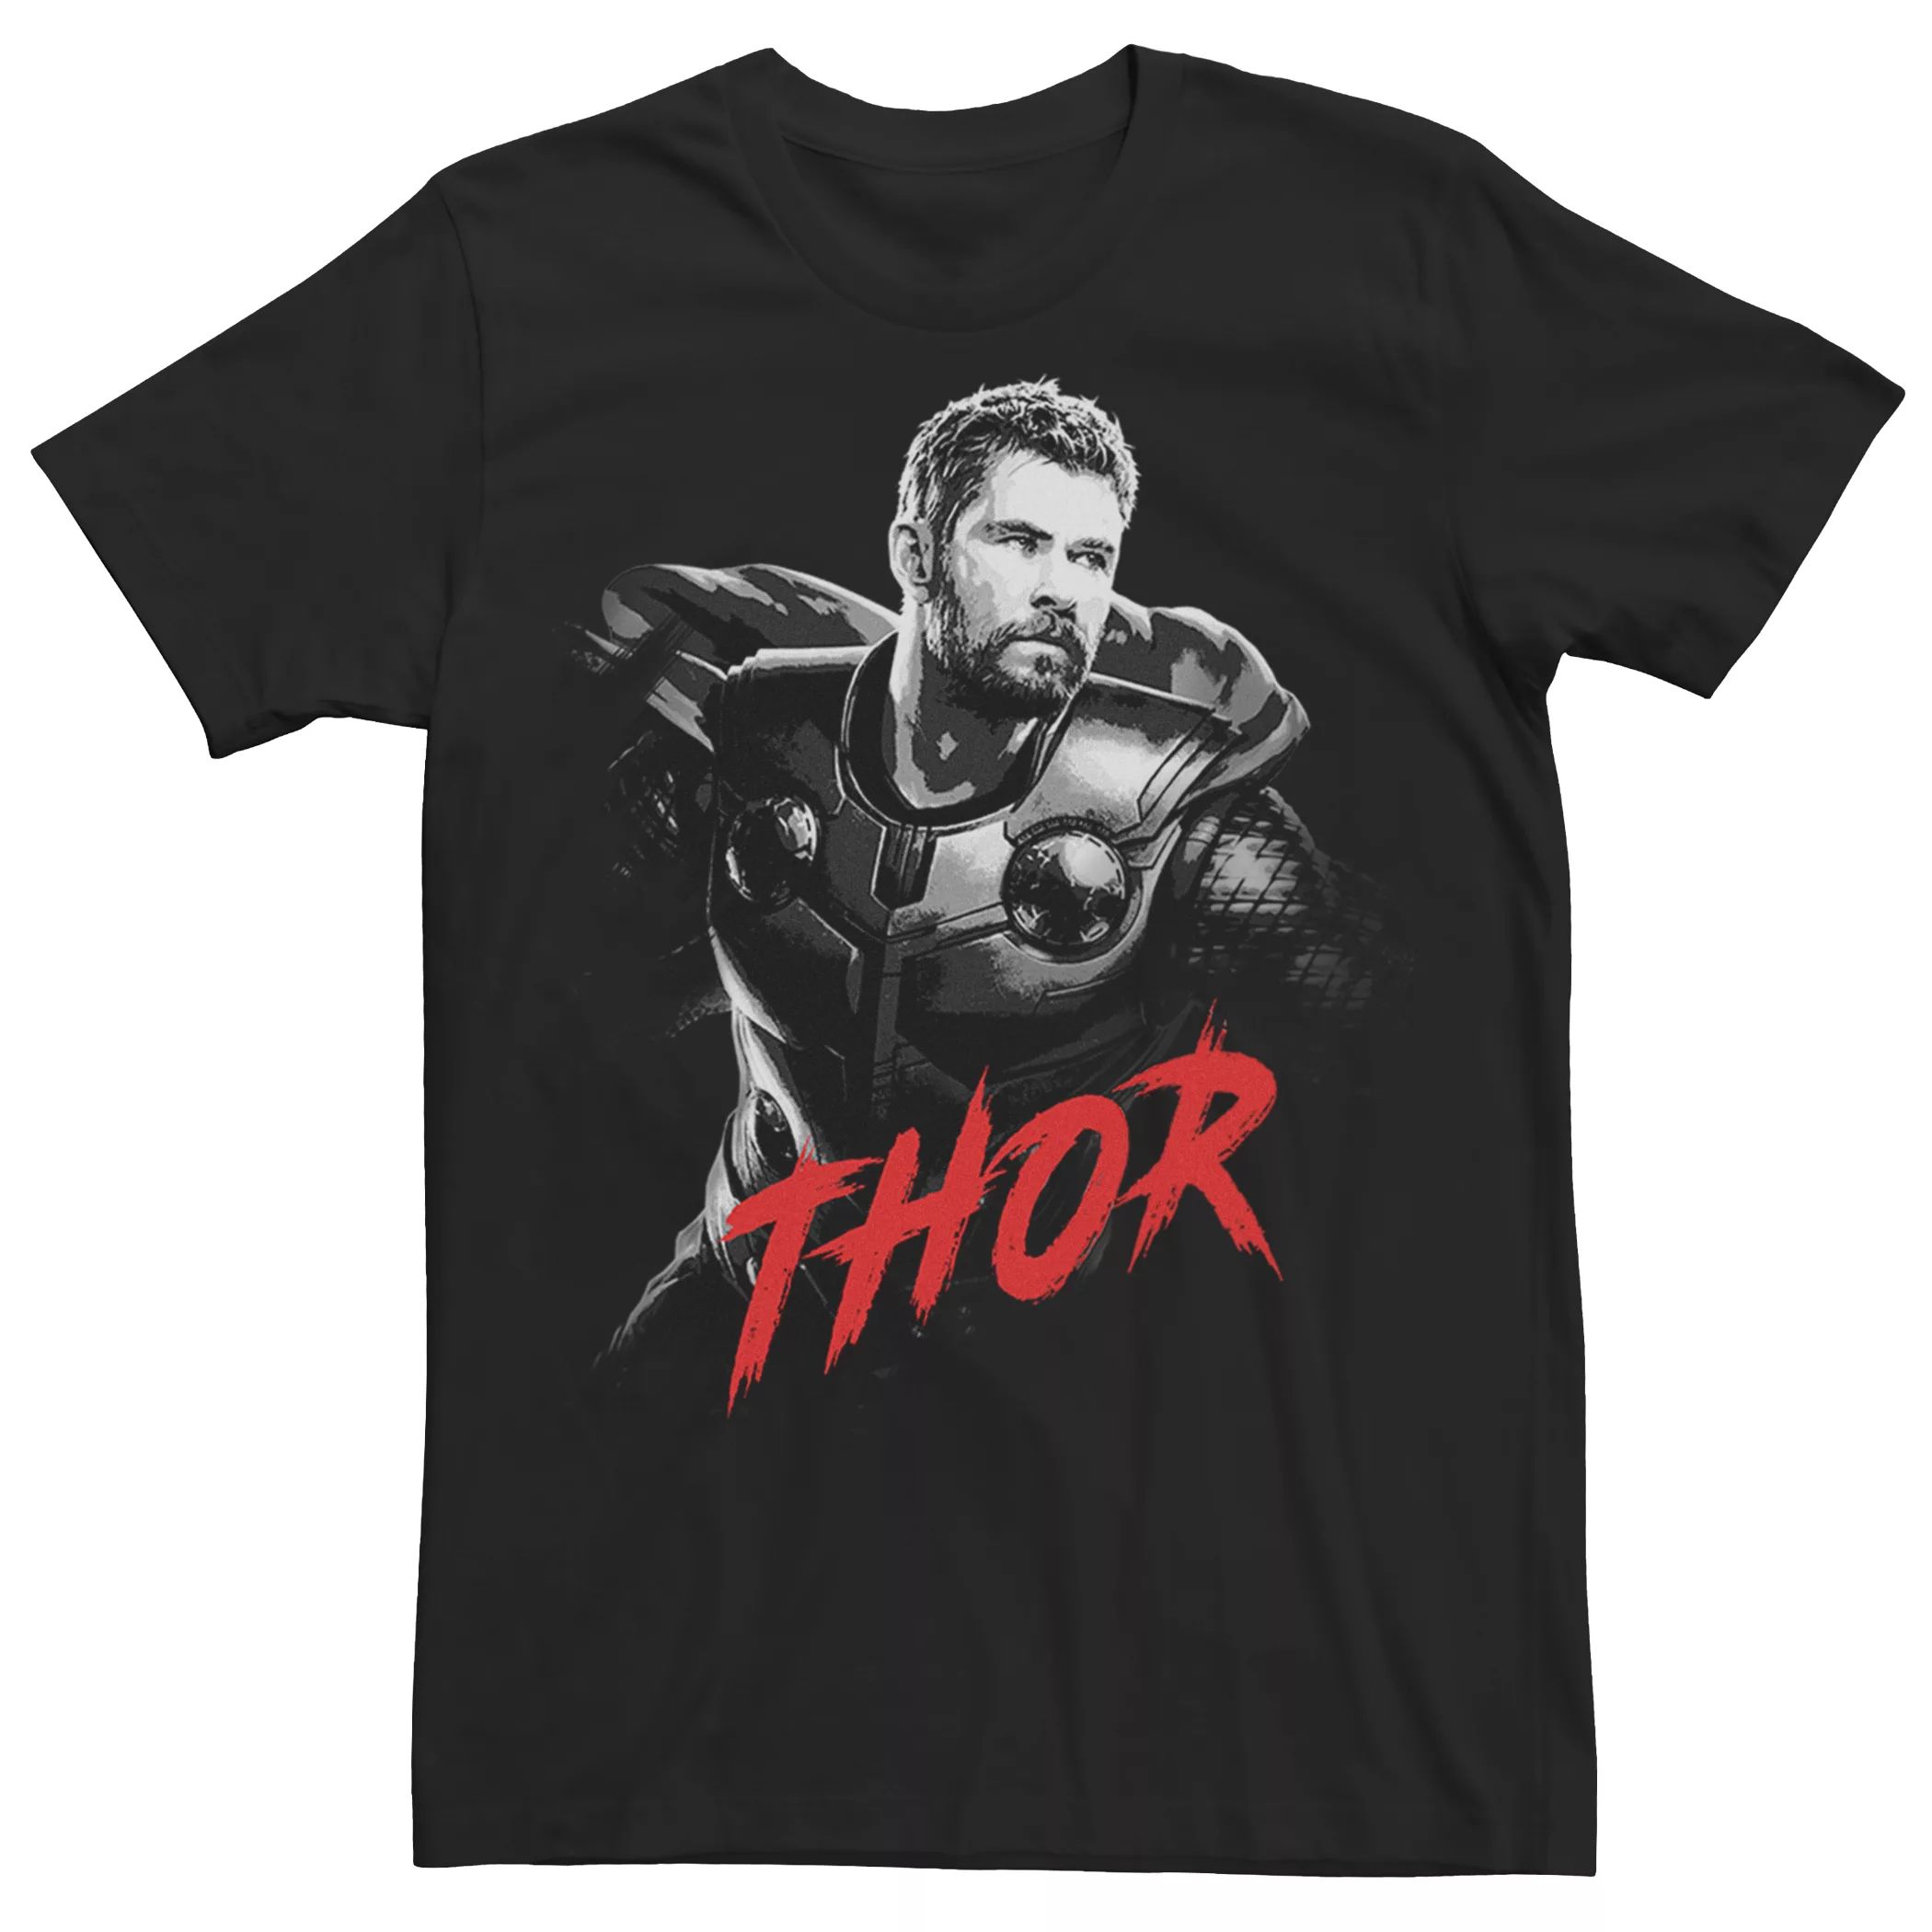 Мужская контрастная футболка Thor с изображением Marvel Avengers